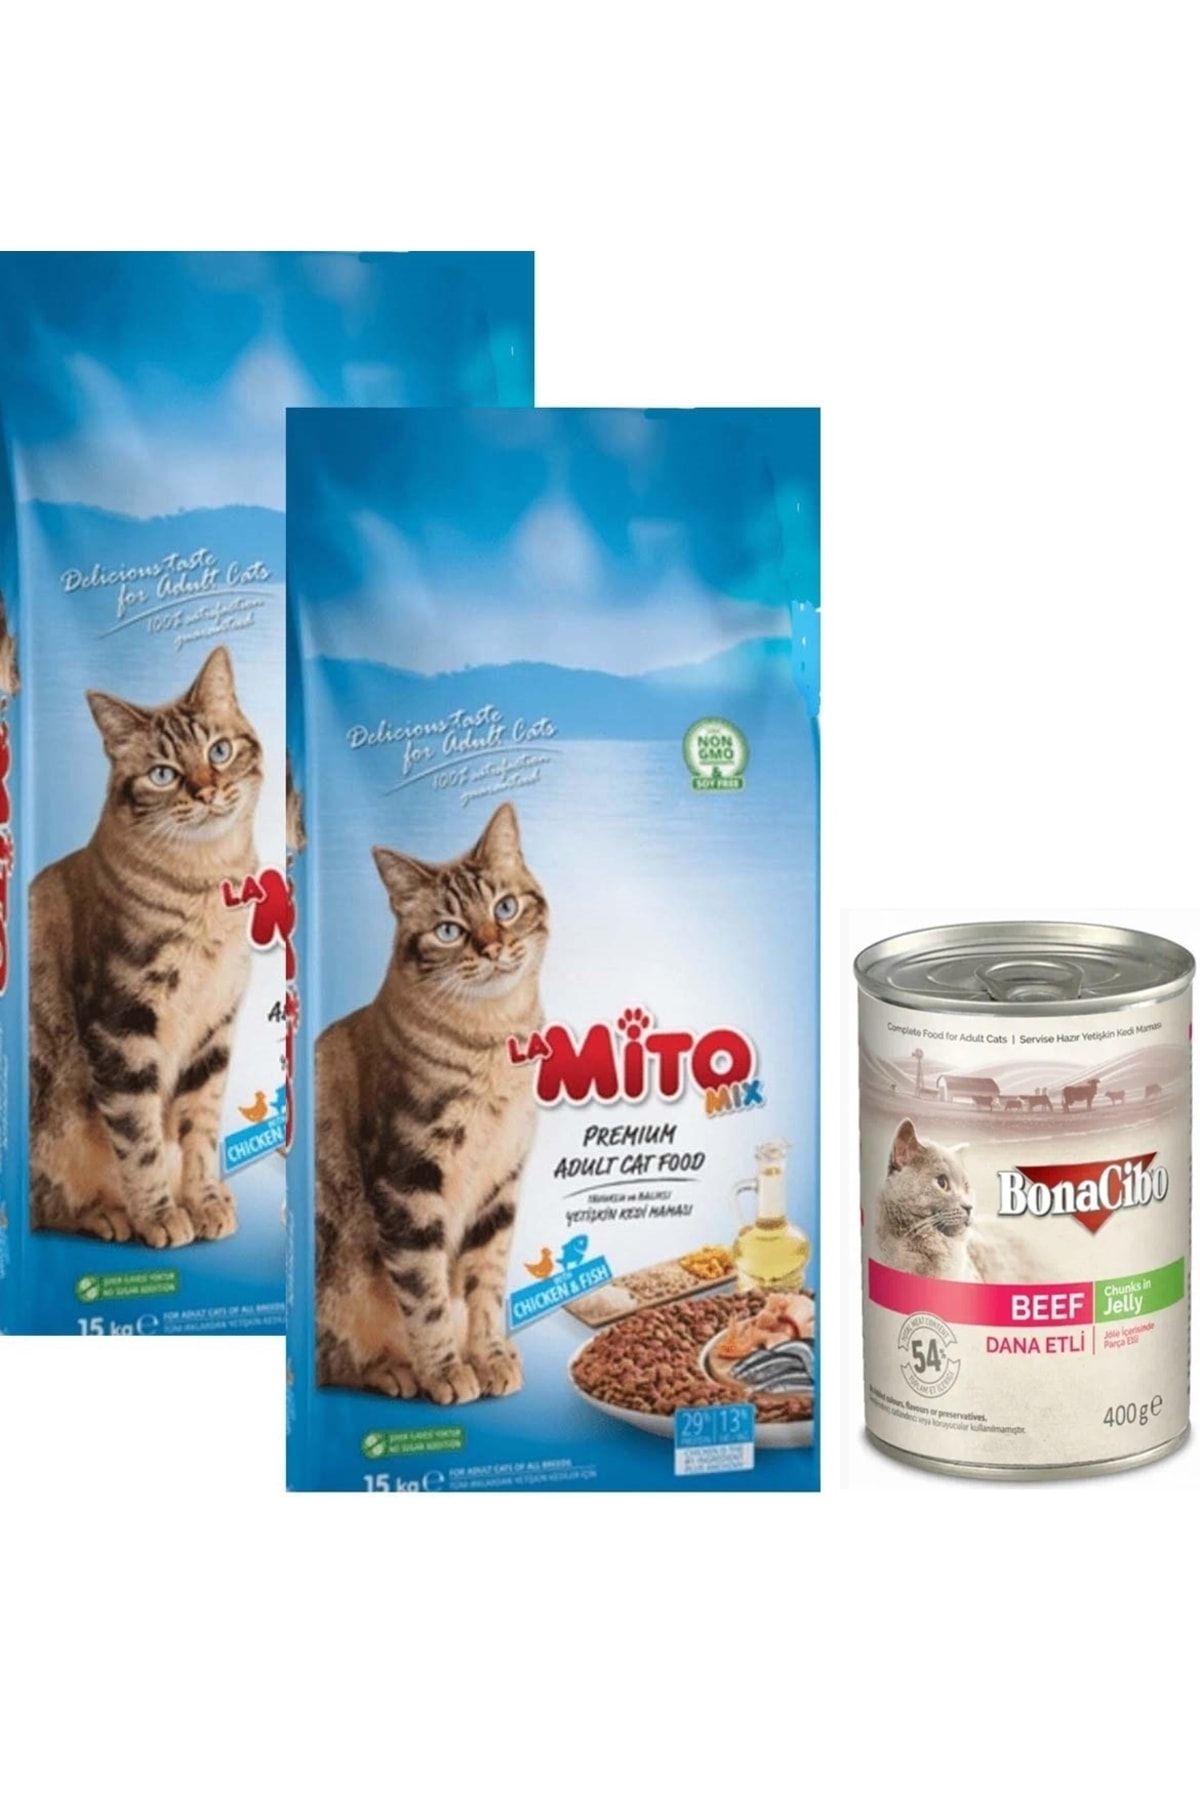 Mito Mix Adult Cat Tavuklu Ve Balıklı Renkli Kedi Maması 1 Kg X 2 Ad. + Yaş Mama 400 Gr. (dana Etli)